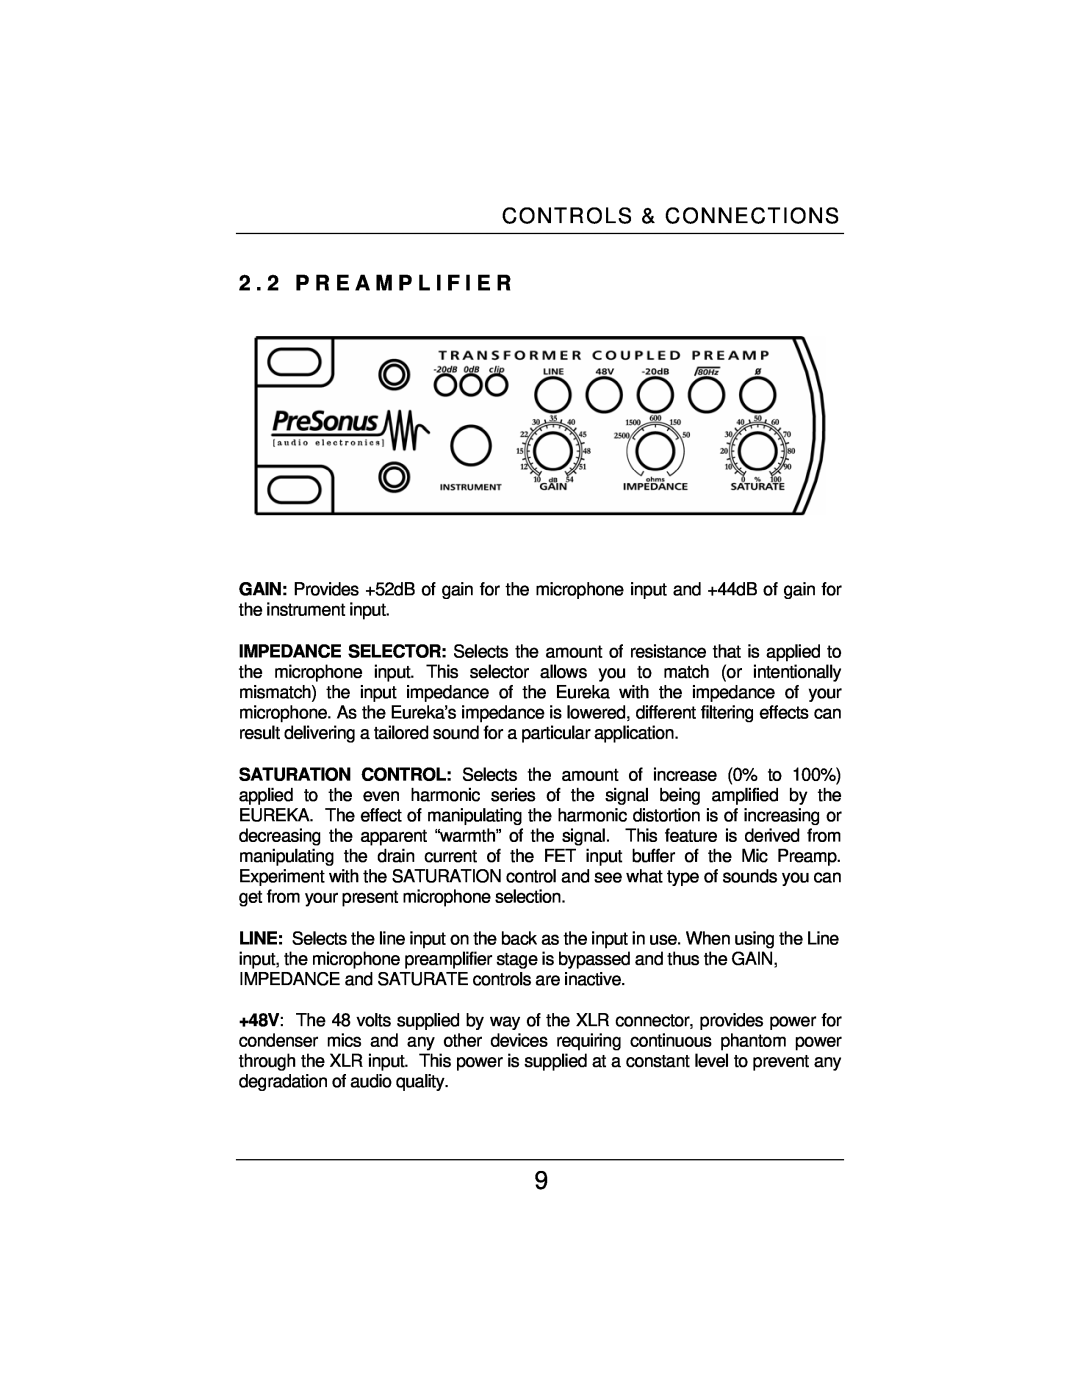 Eureka Microphone Preamplifier user manual 2 . 2 P R E A M P L I F I E R, Controls & Connections 